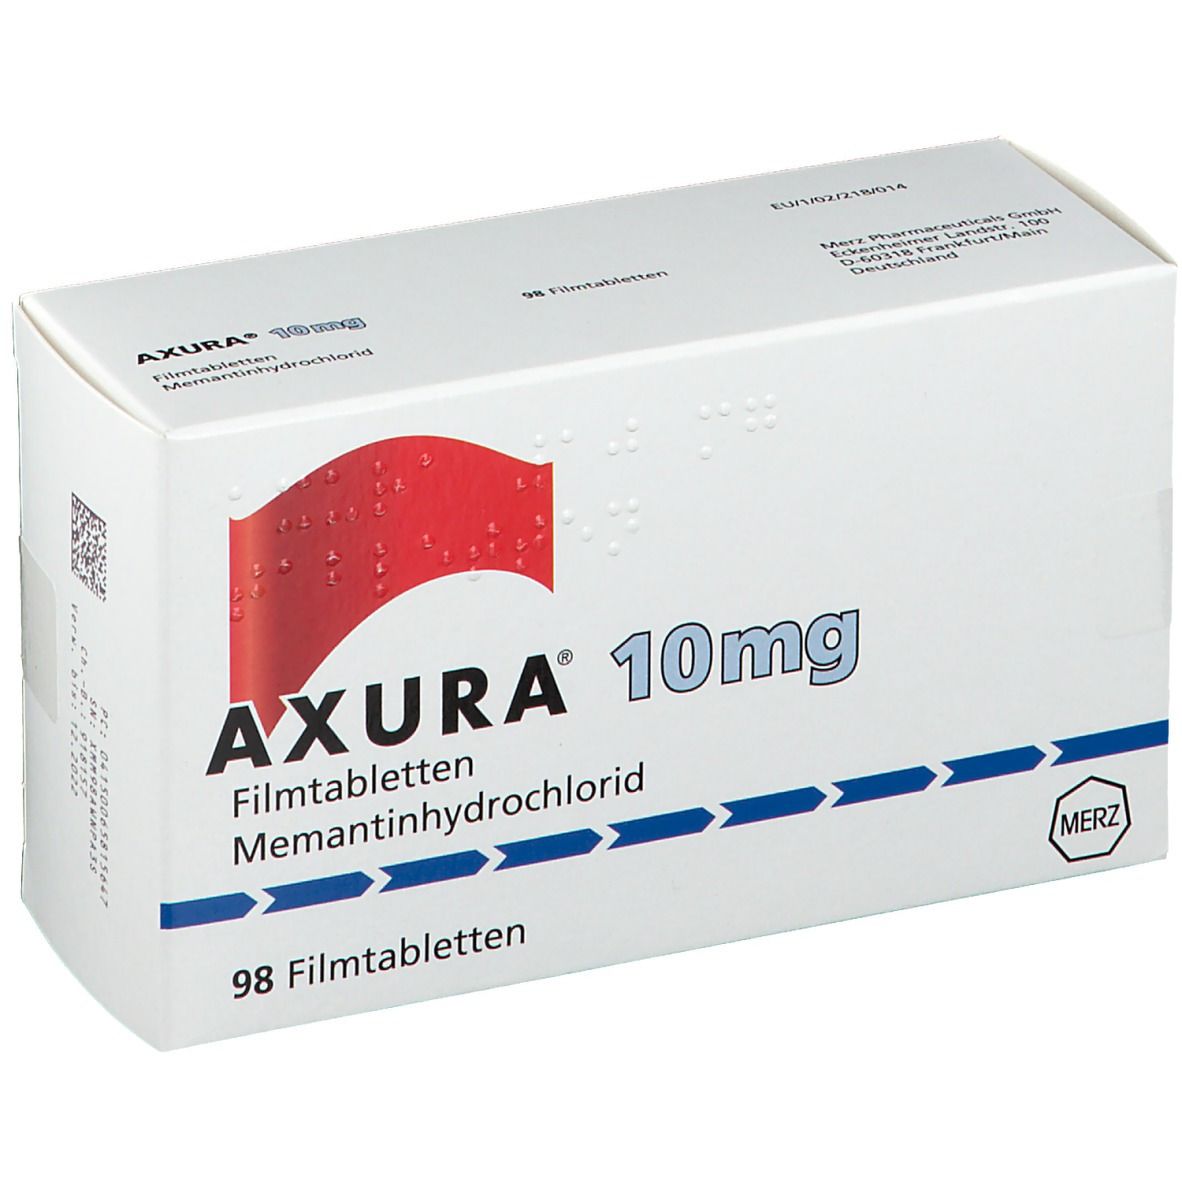 AXURA® 10 mg